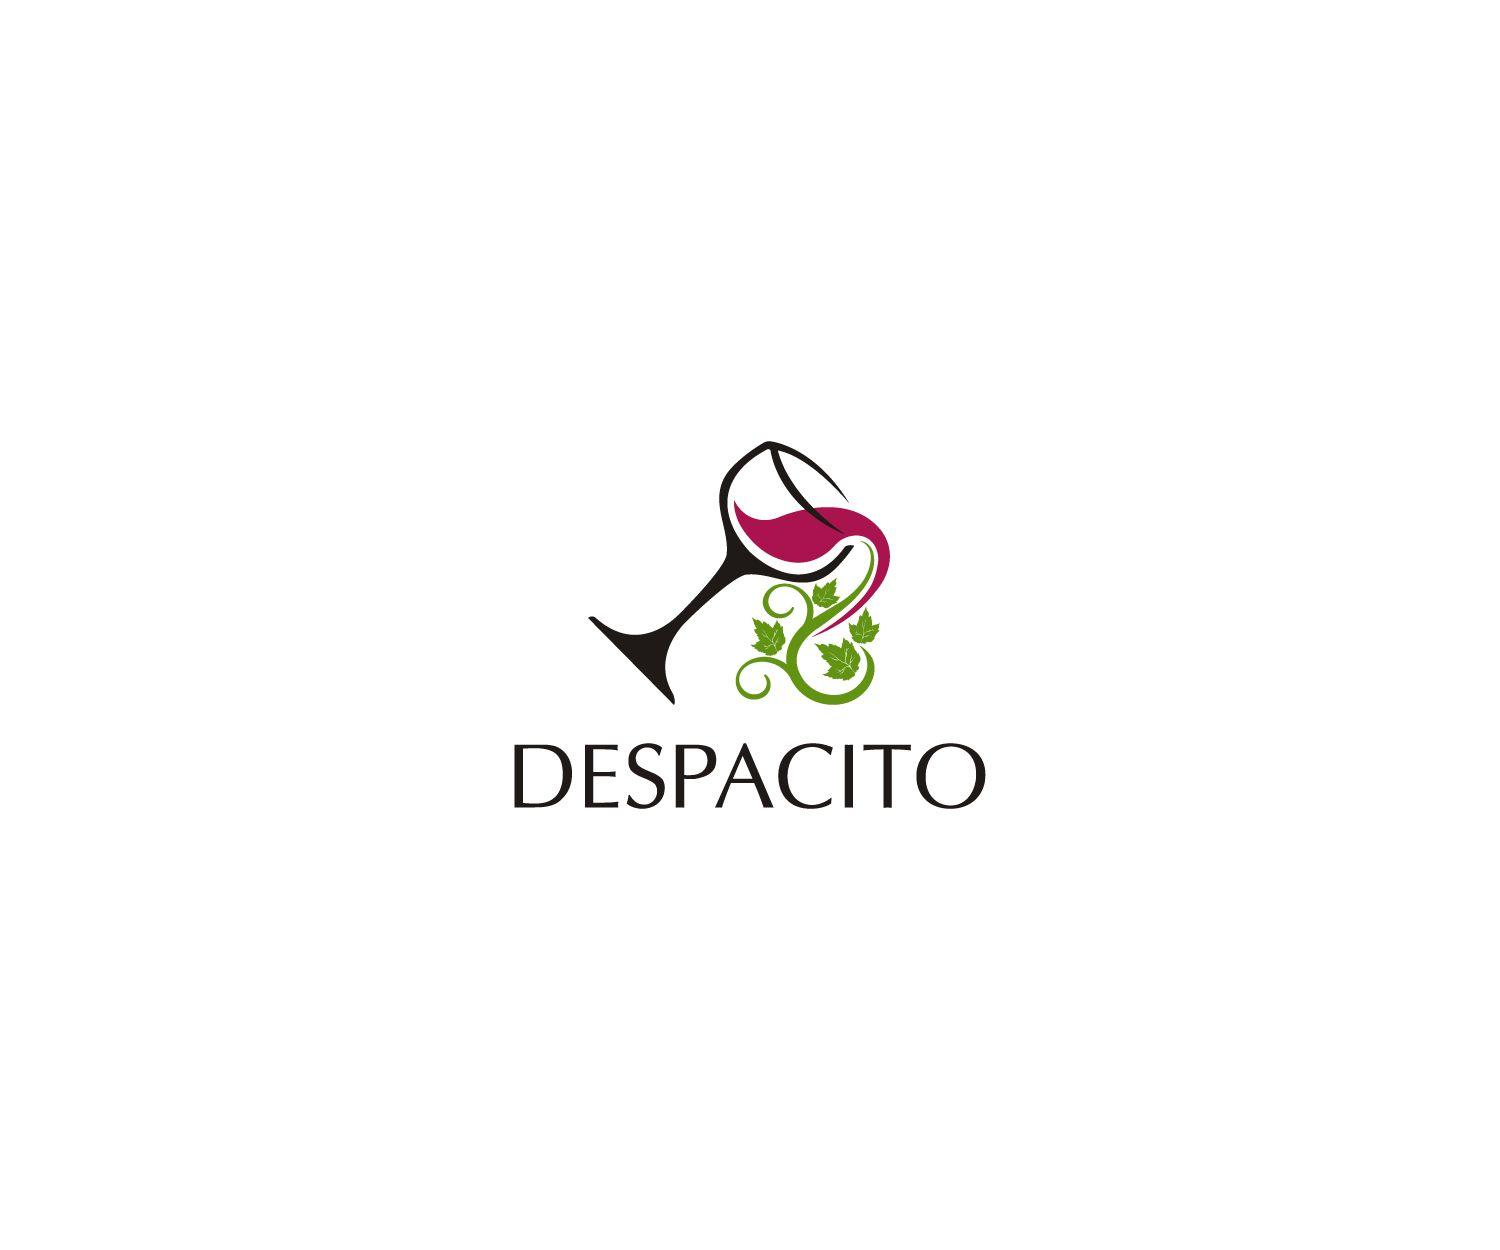 Distributor Logo - Bold, Modern, Distributor Logo Design for Despacito